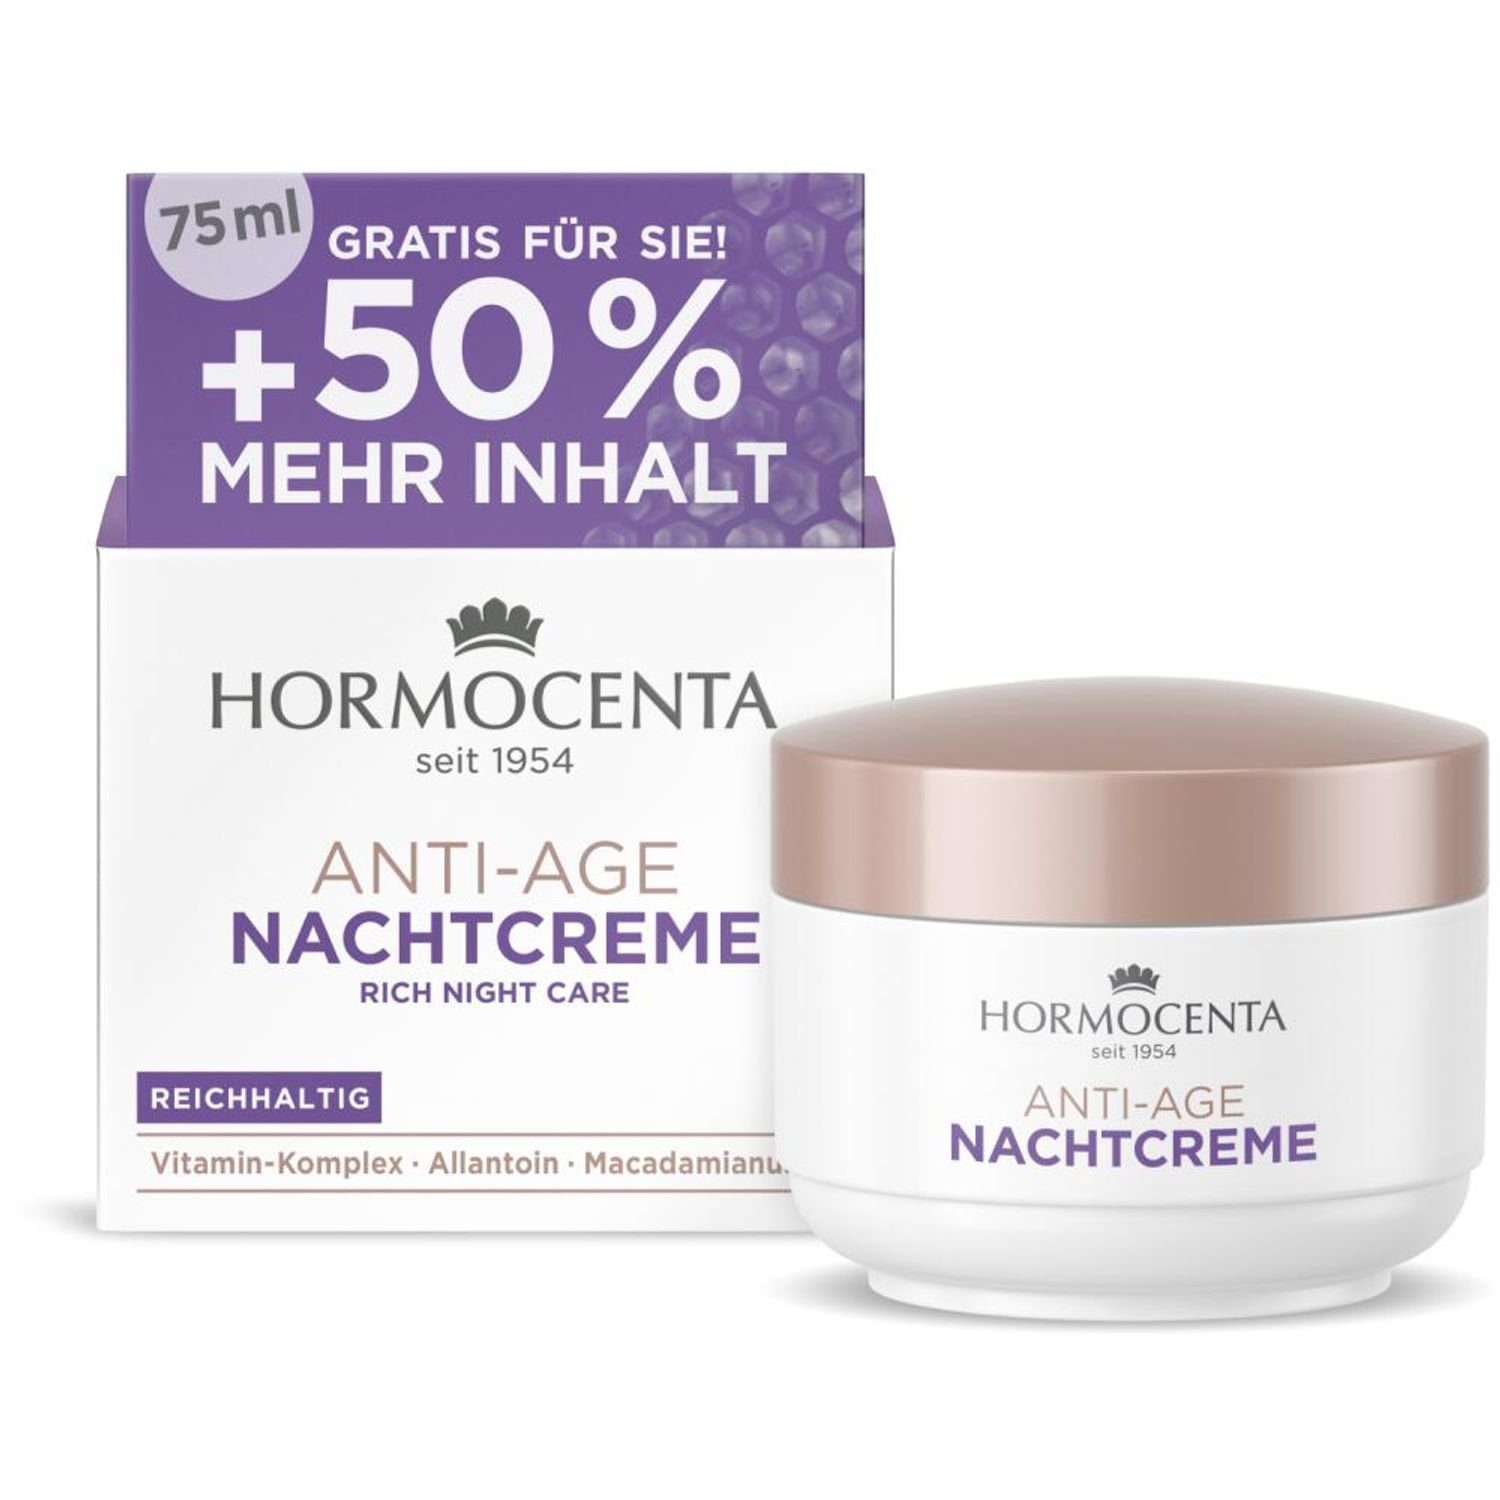 GmbH Bals Hormocenta 6x 75ml Pflege Kosmetik Gesicht Lotion Hormocenta Nachtcreme Anti Age Haut Körpercreme